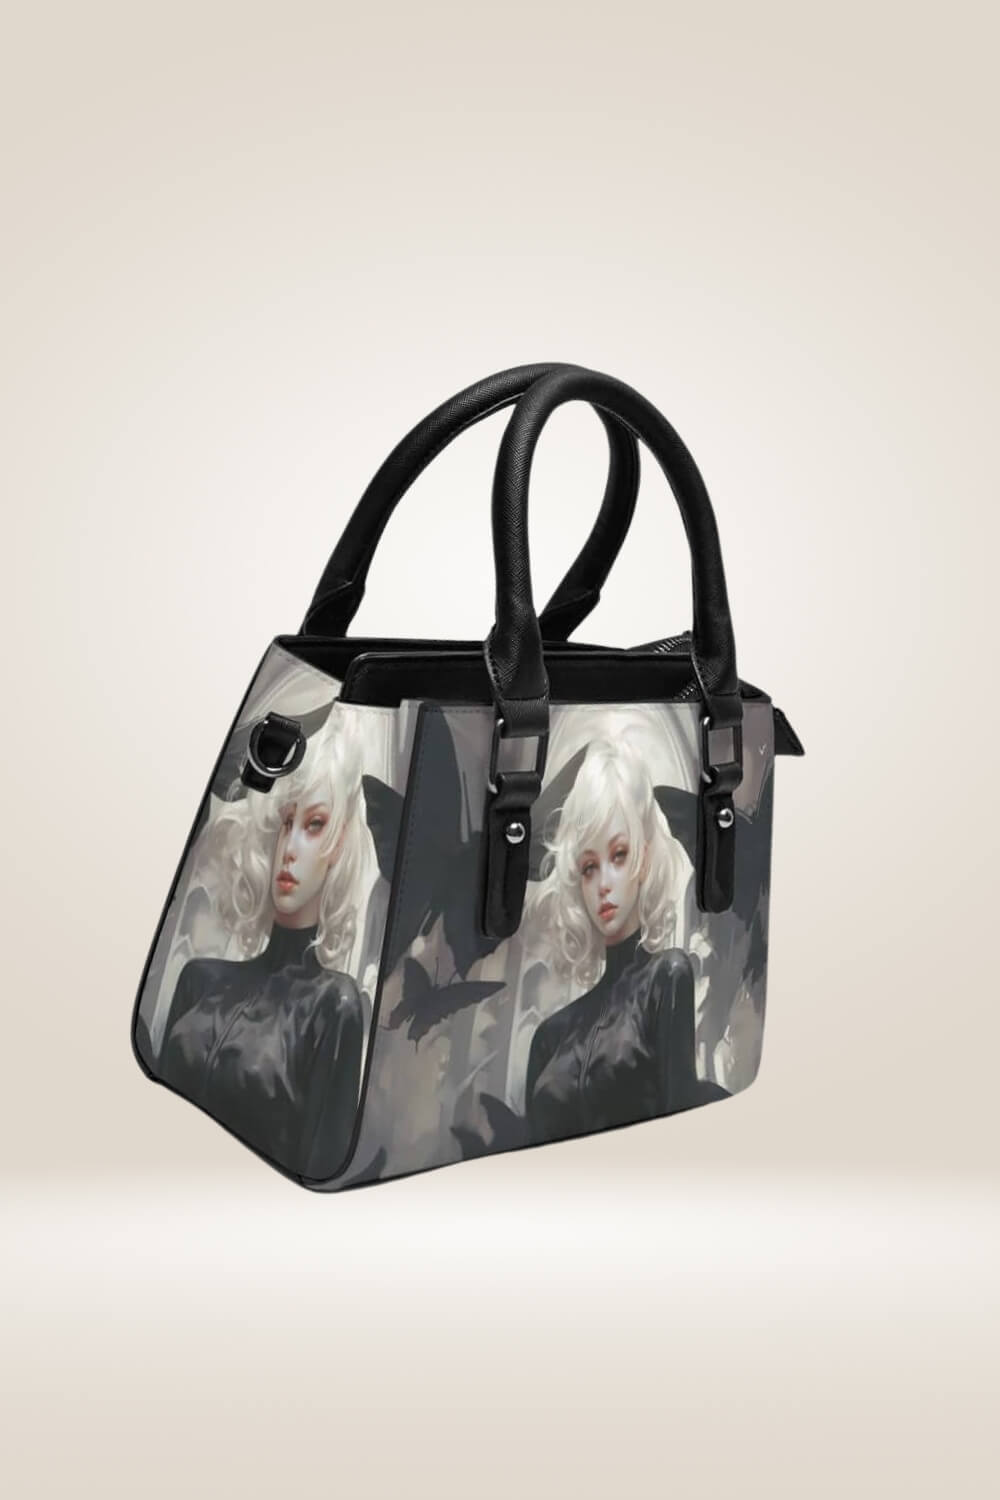 Blonde Manga Girl Black Satchel Bag - TGC Boutique - Satchel Handbag